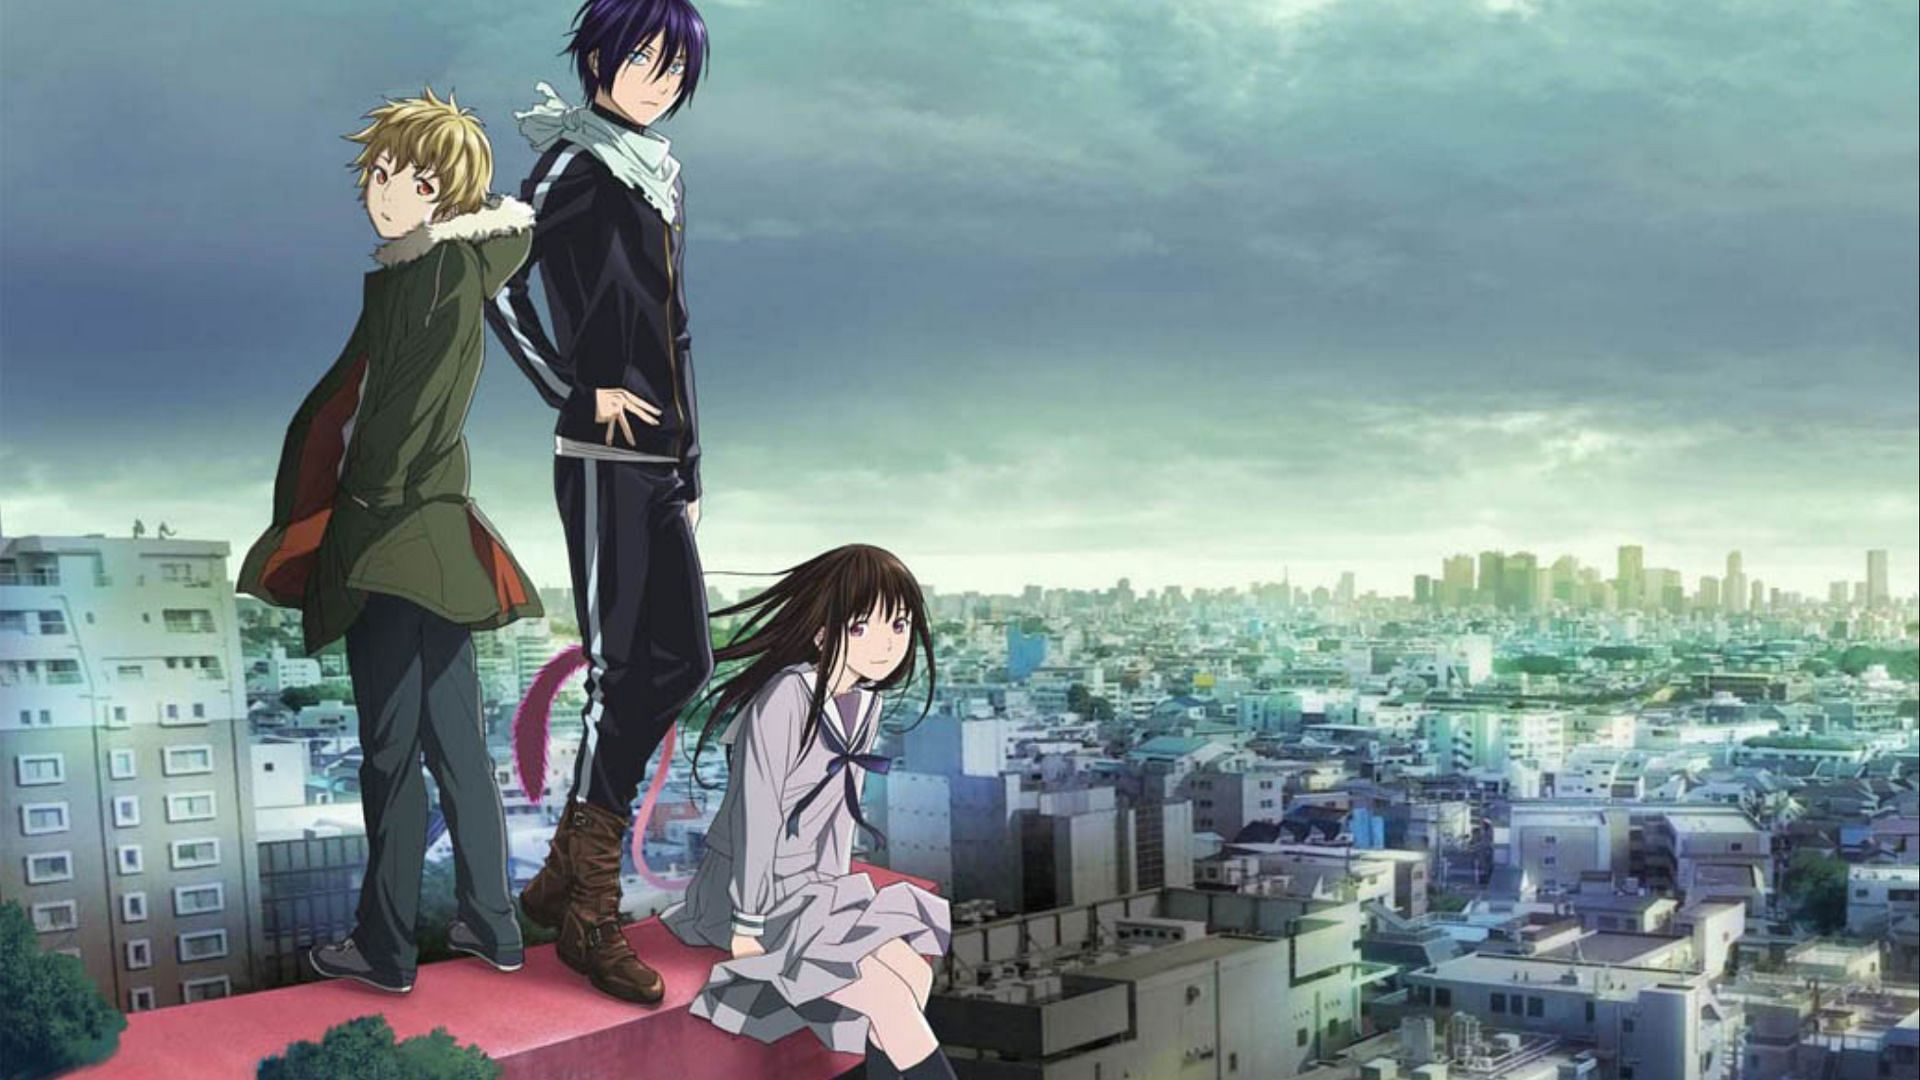 Noragami: Noragami season 3: Why Studio Bones fails to announce the anime  despite major demand